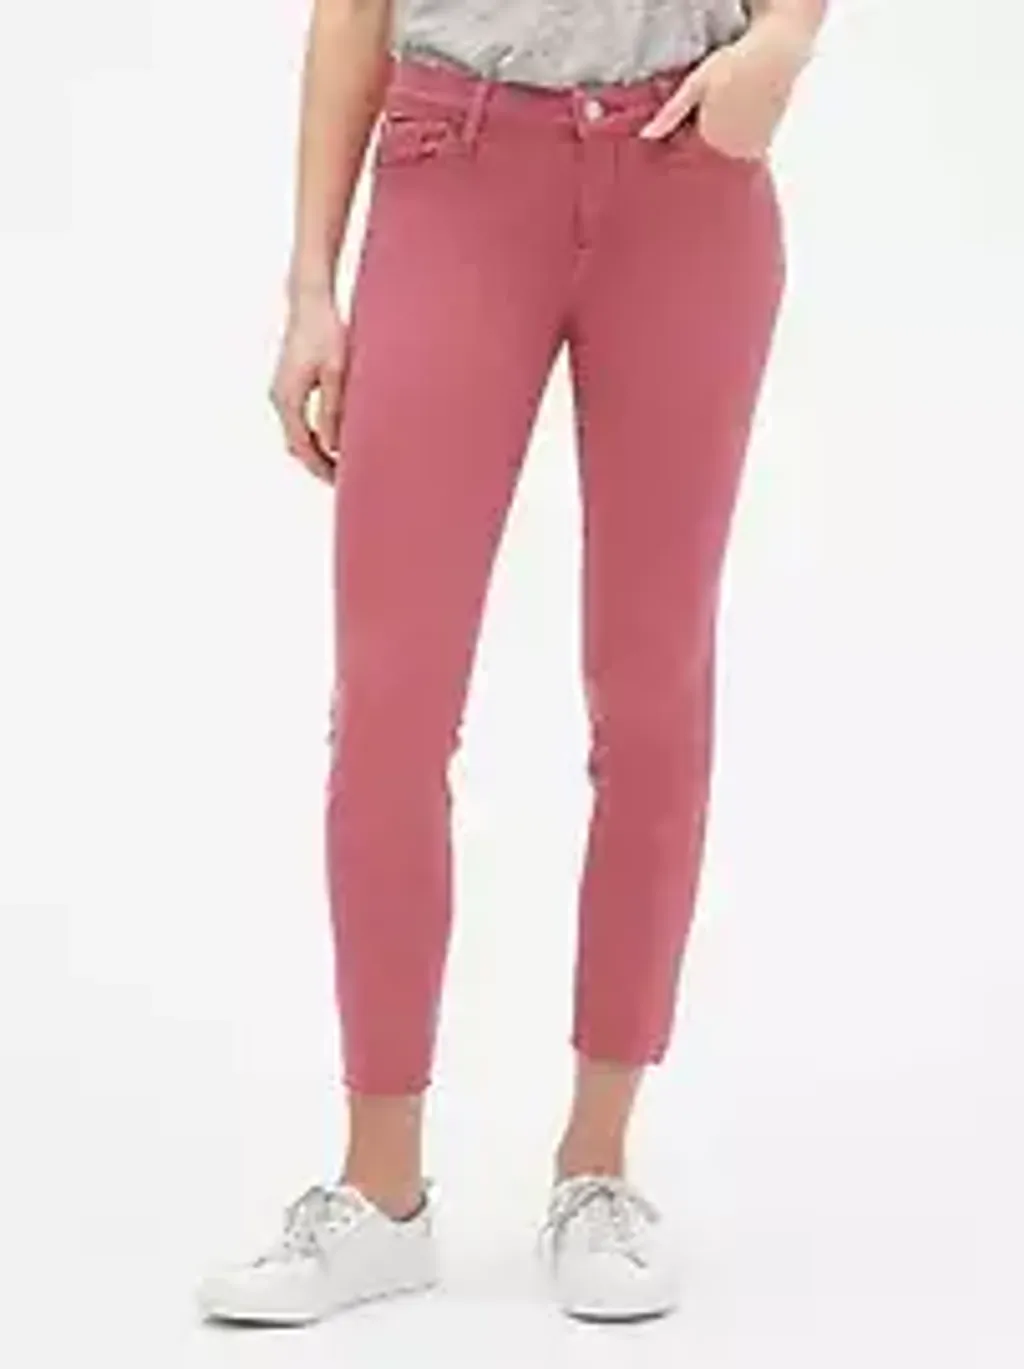 gap Mid Rise Cropped Girlfriend Jeans $8.6 w tax 2